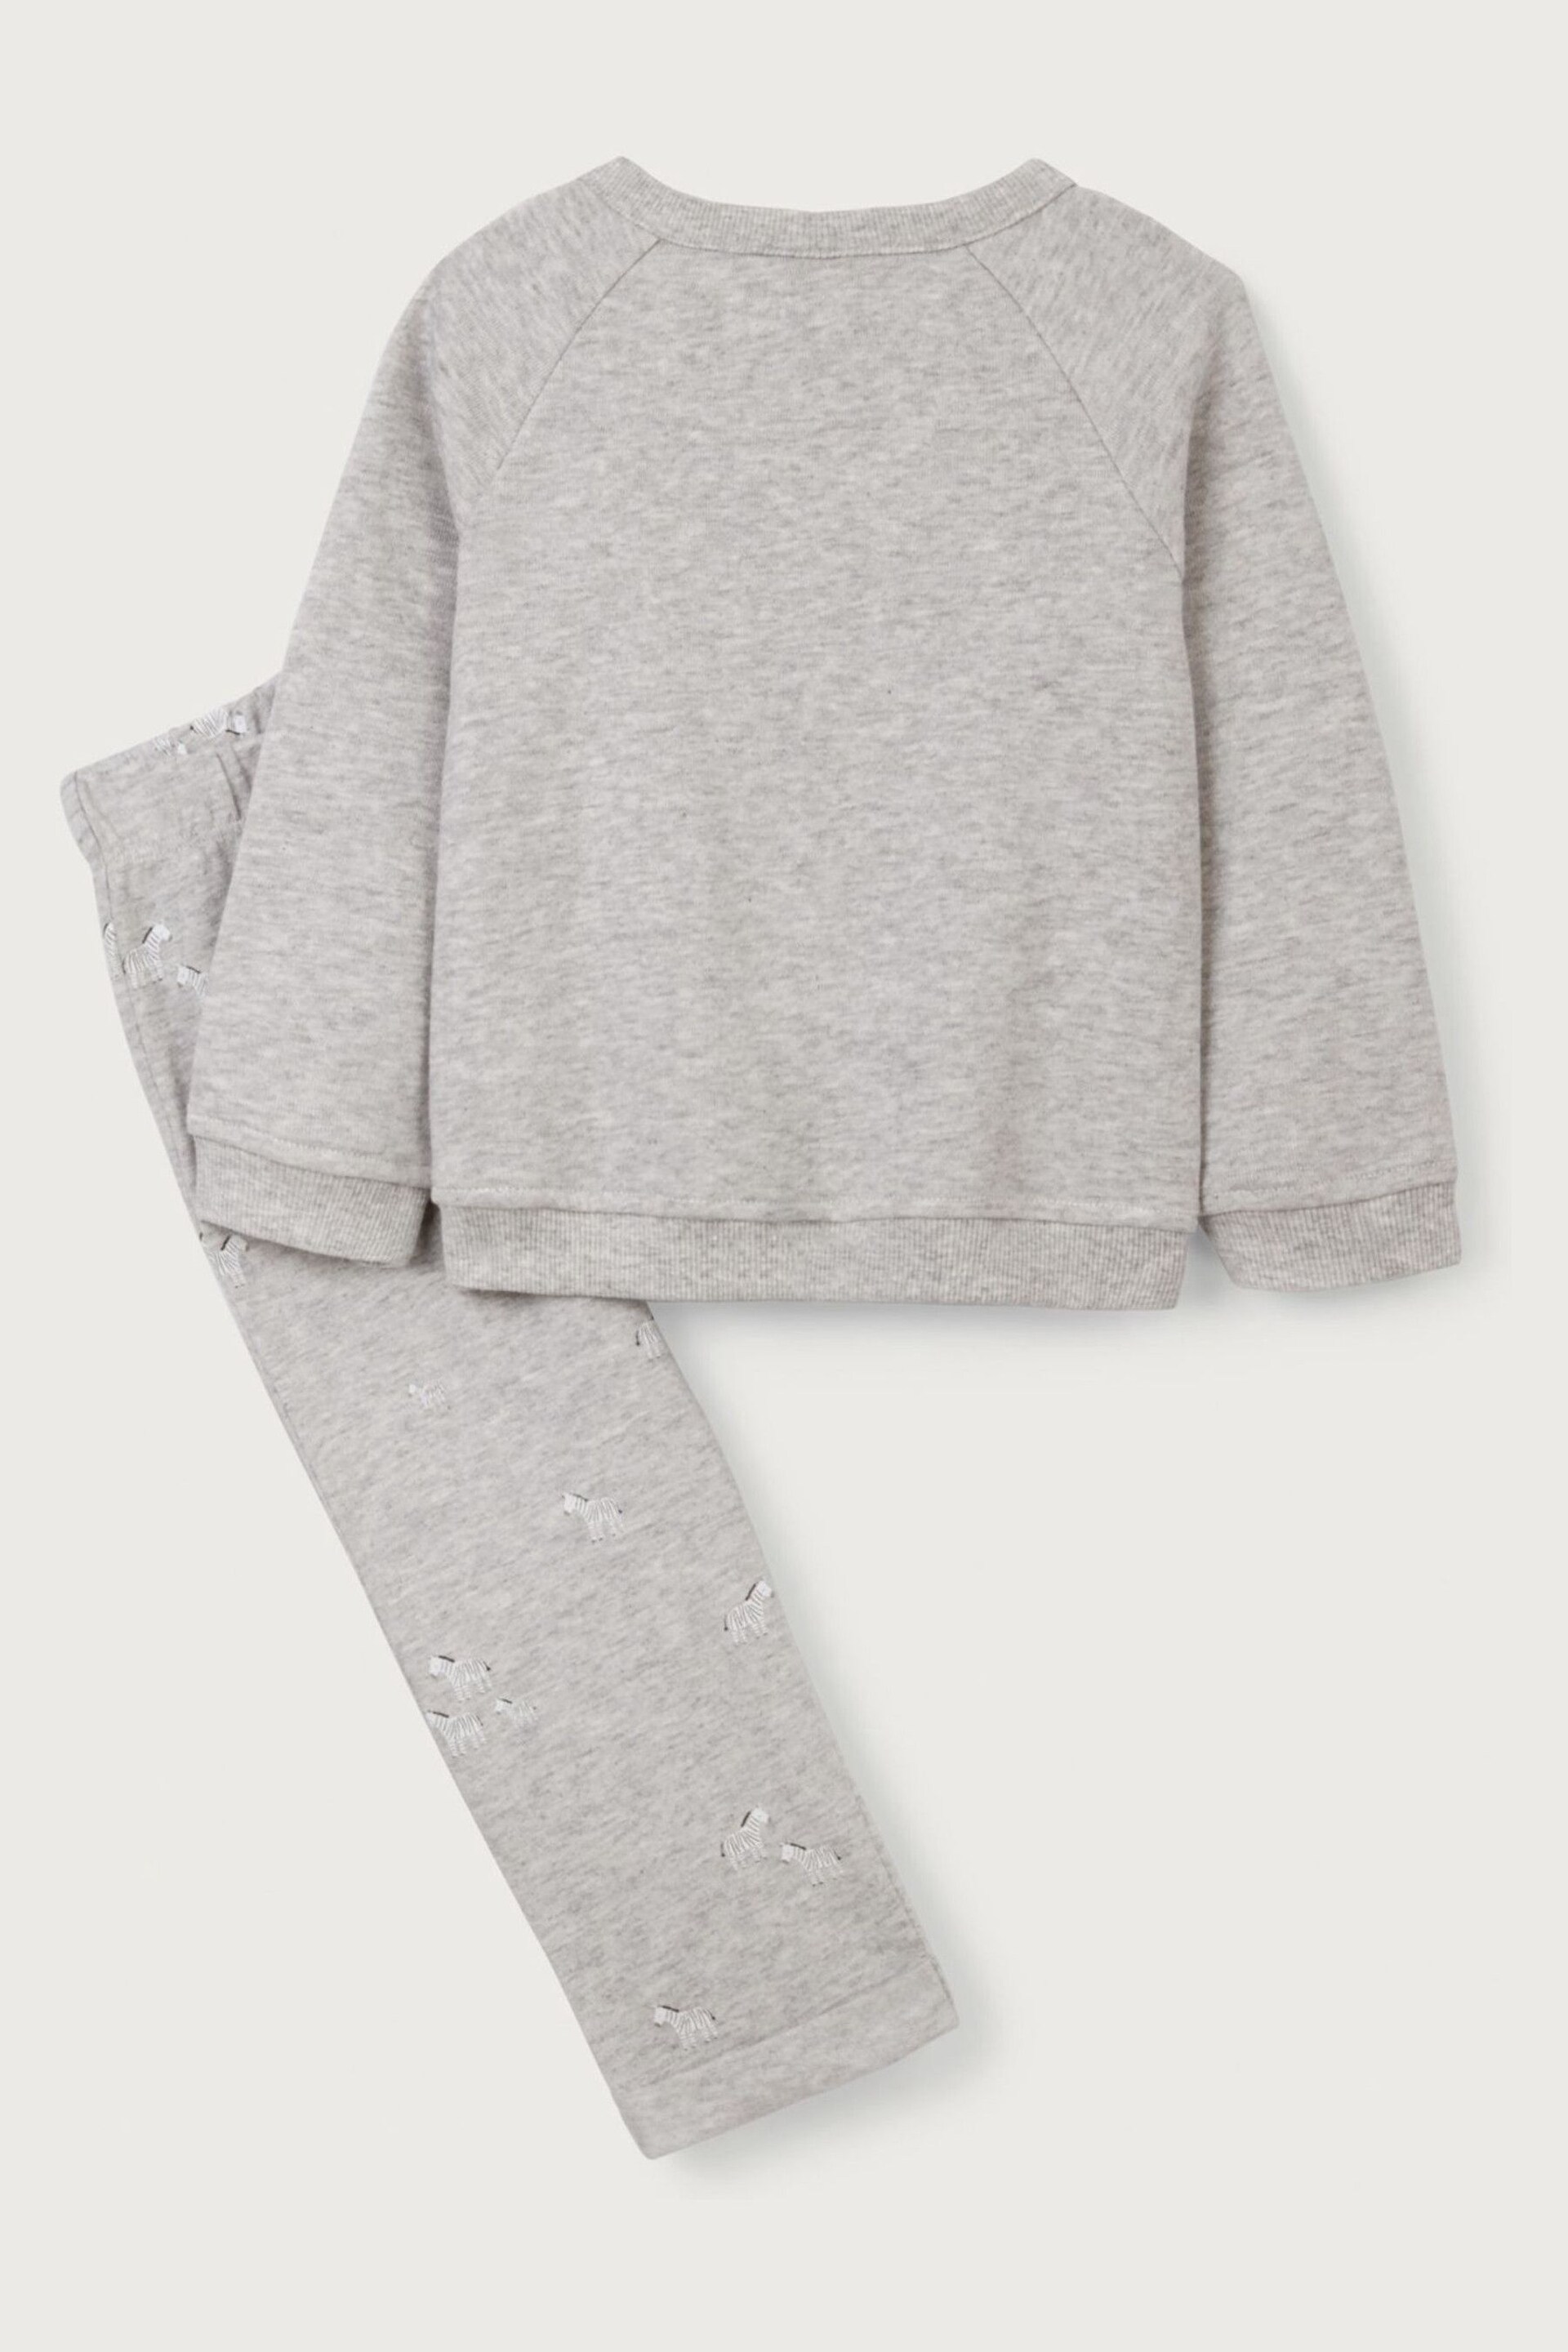 The White Company Grey Cotton Zebra Sweatshirt And Legging Set - Image 6 of 6